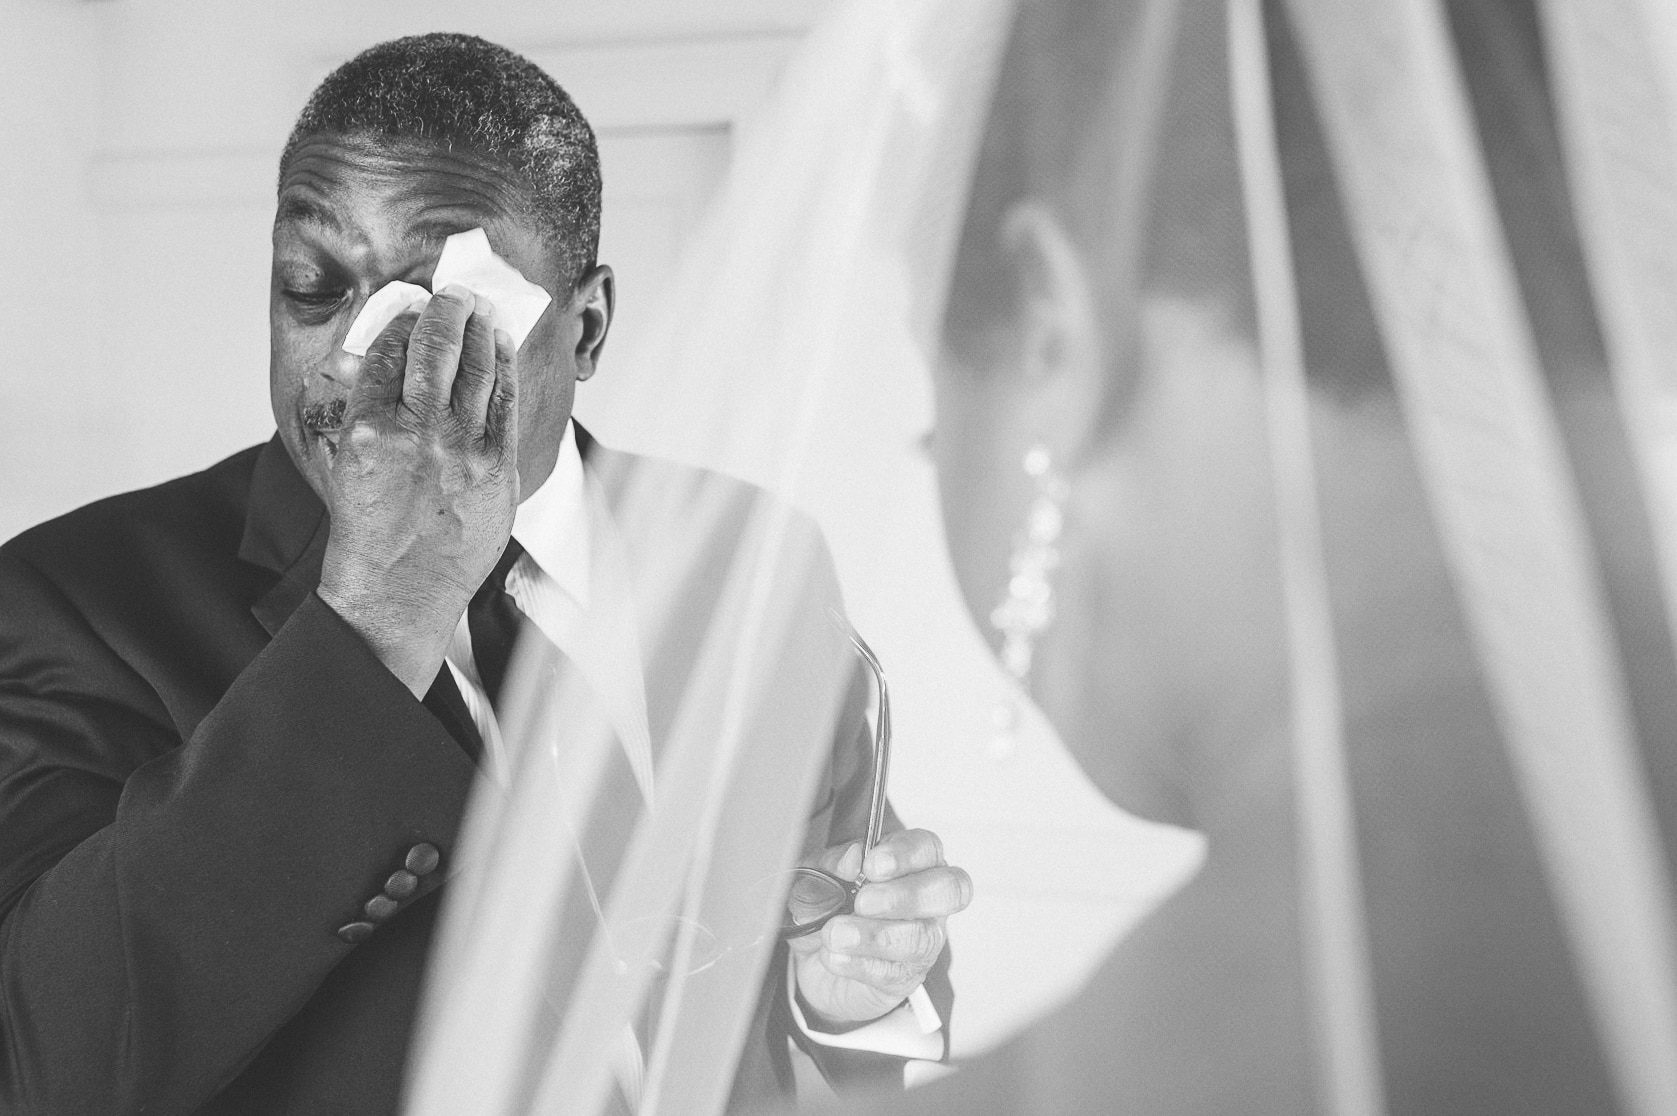 Bowery Hotel wedding in NYC, captured by fun, candid, documentary NYC wedding photographer Ben Lau.